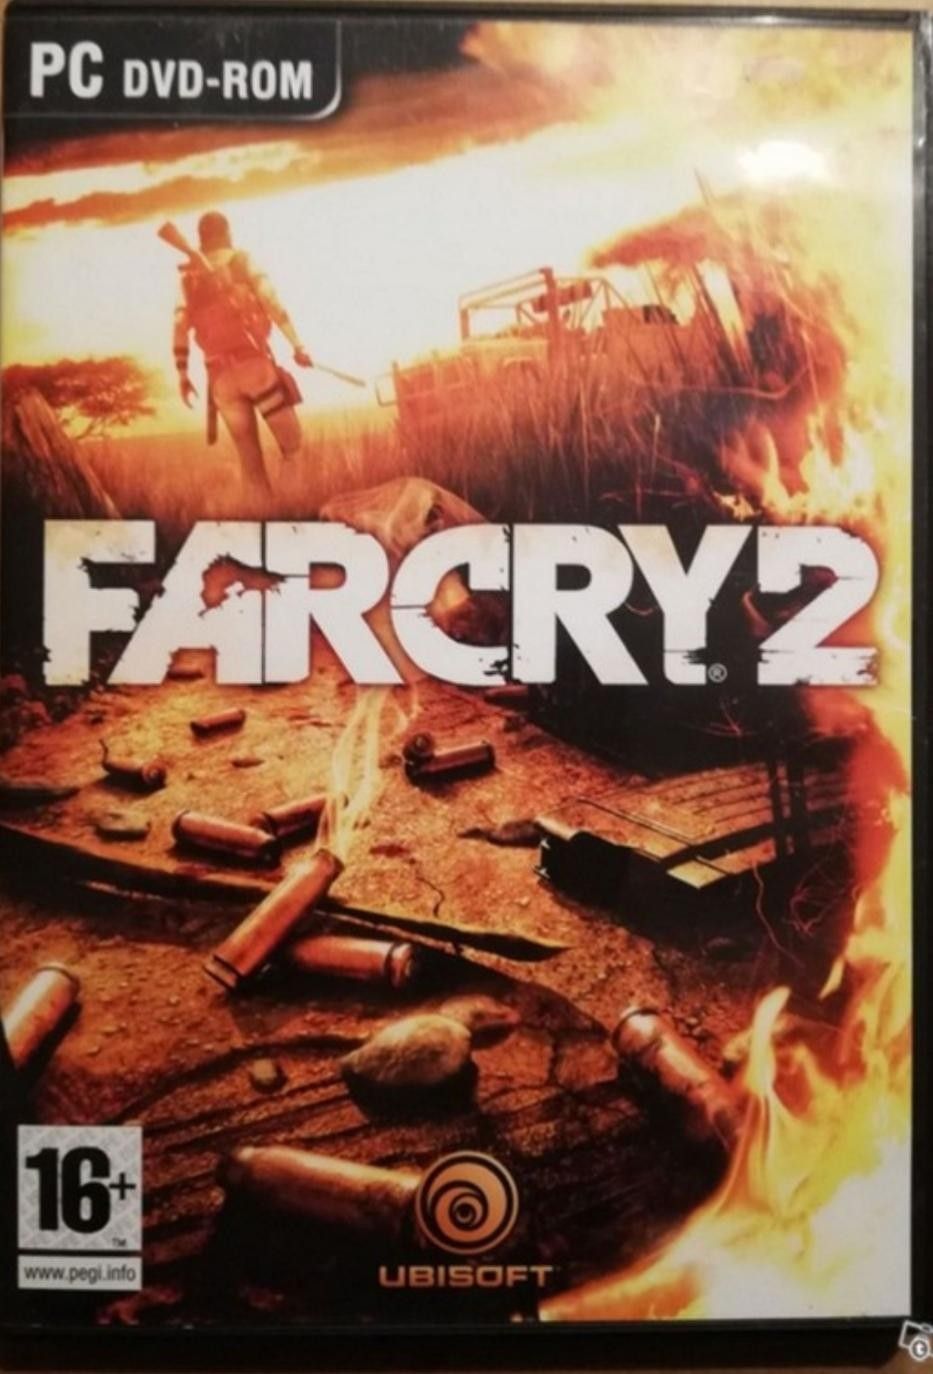 PC DVD ROM, FarCry 2 peli